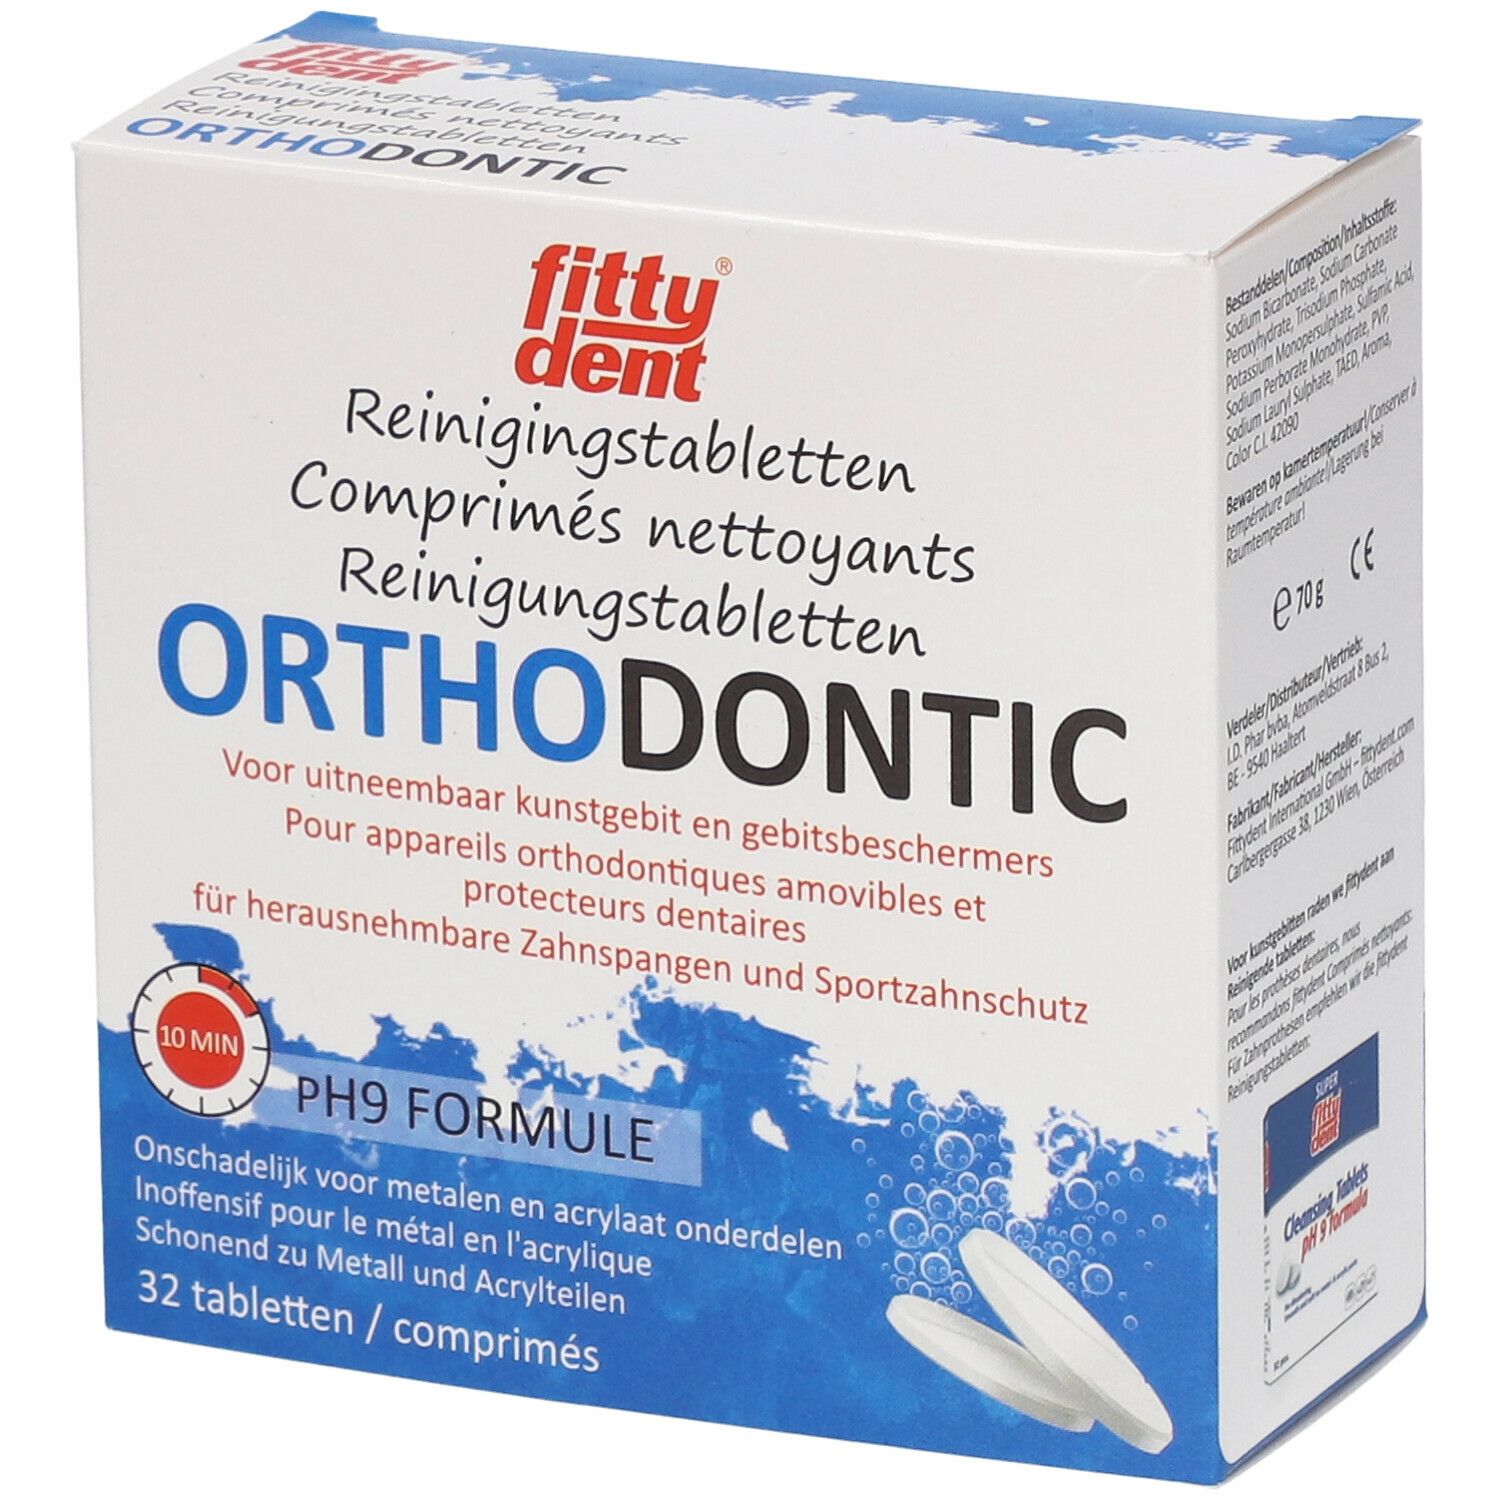 fittydent® Orthodontic Comprimés nettoyants